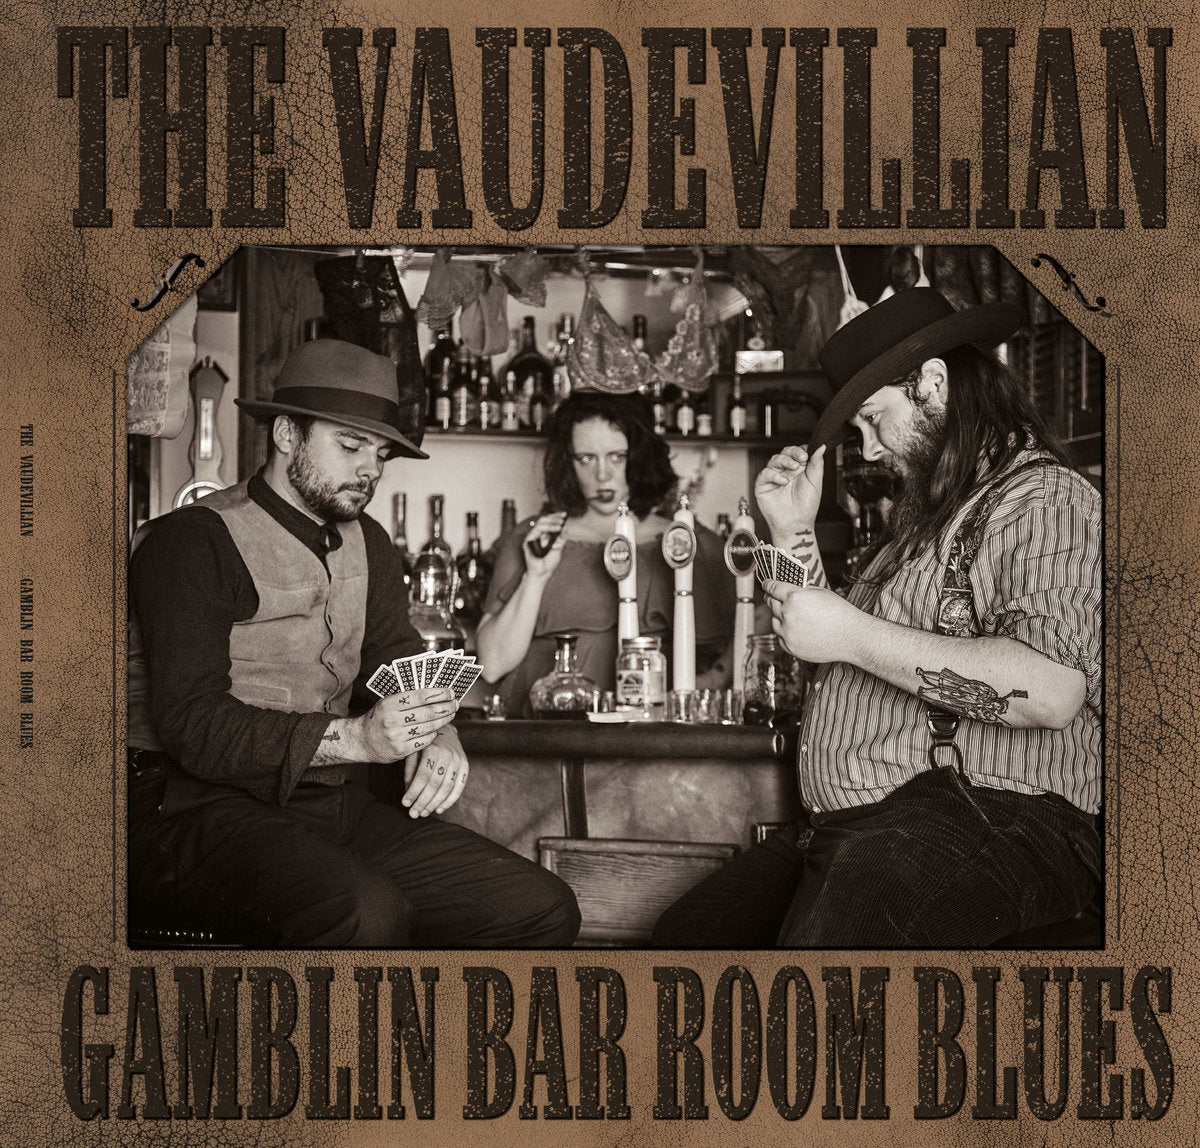 The Vaudevillian - Gambling Bar Room Blues CD